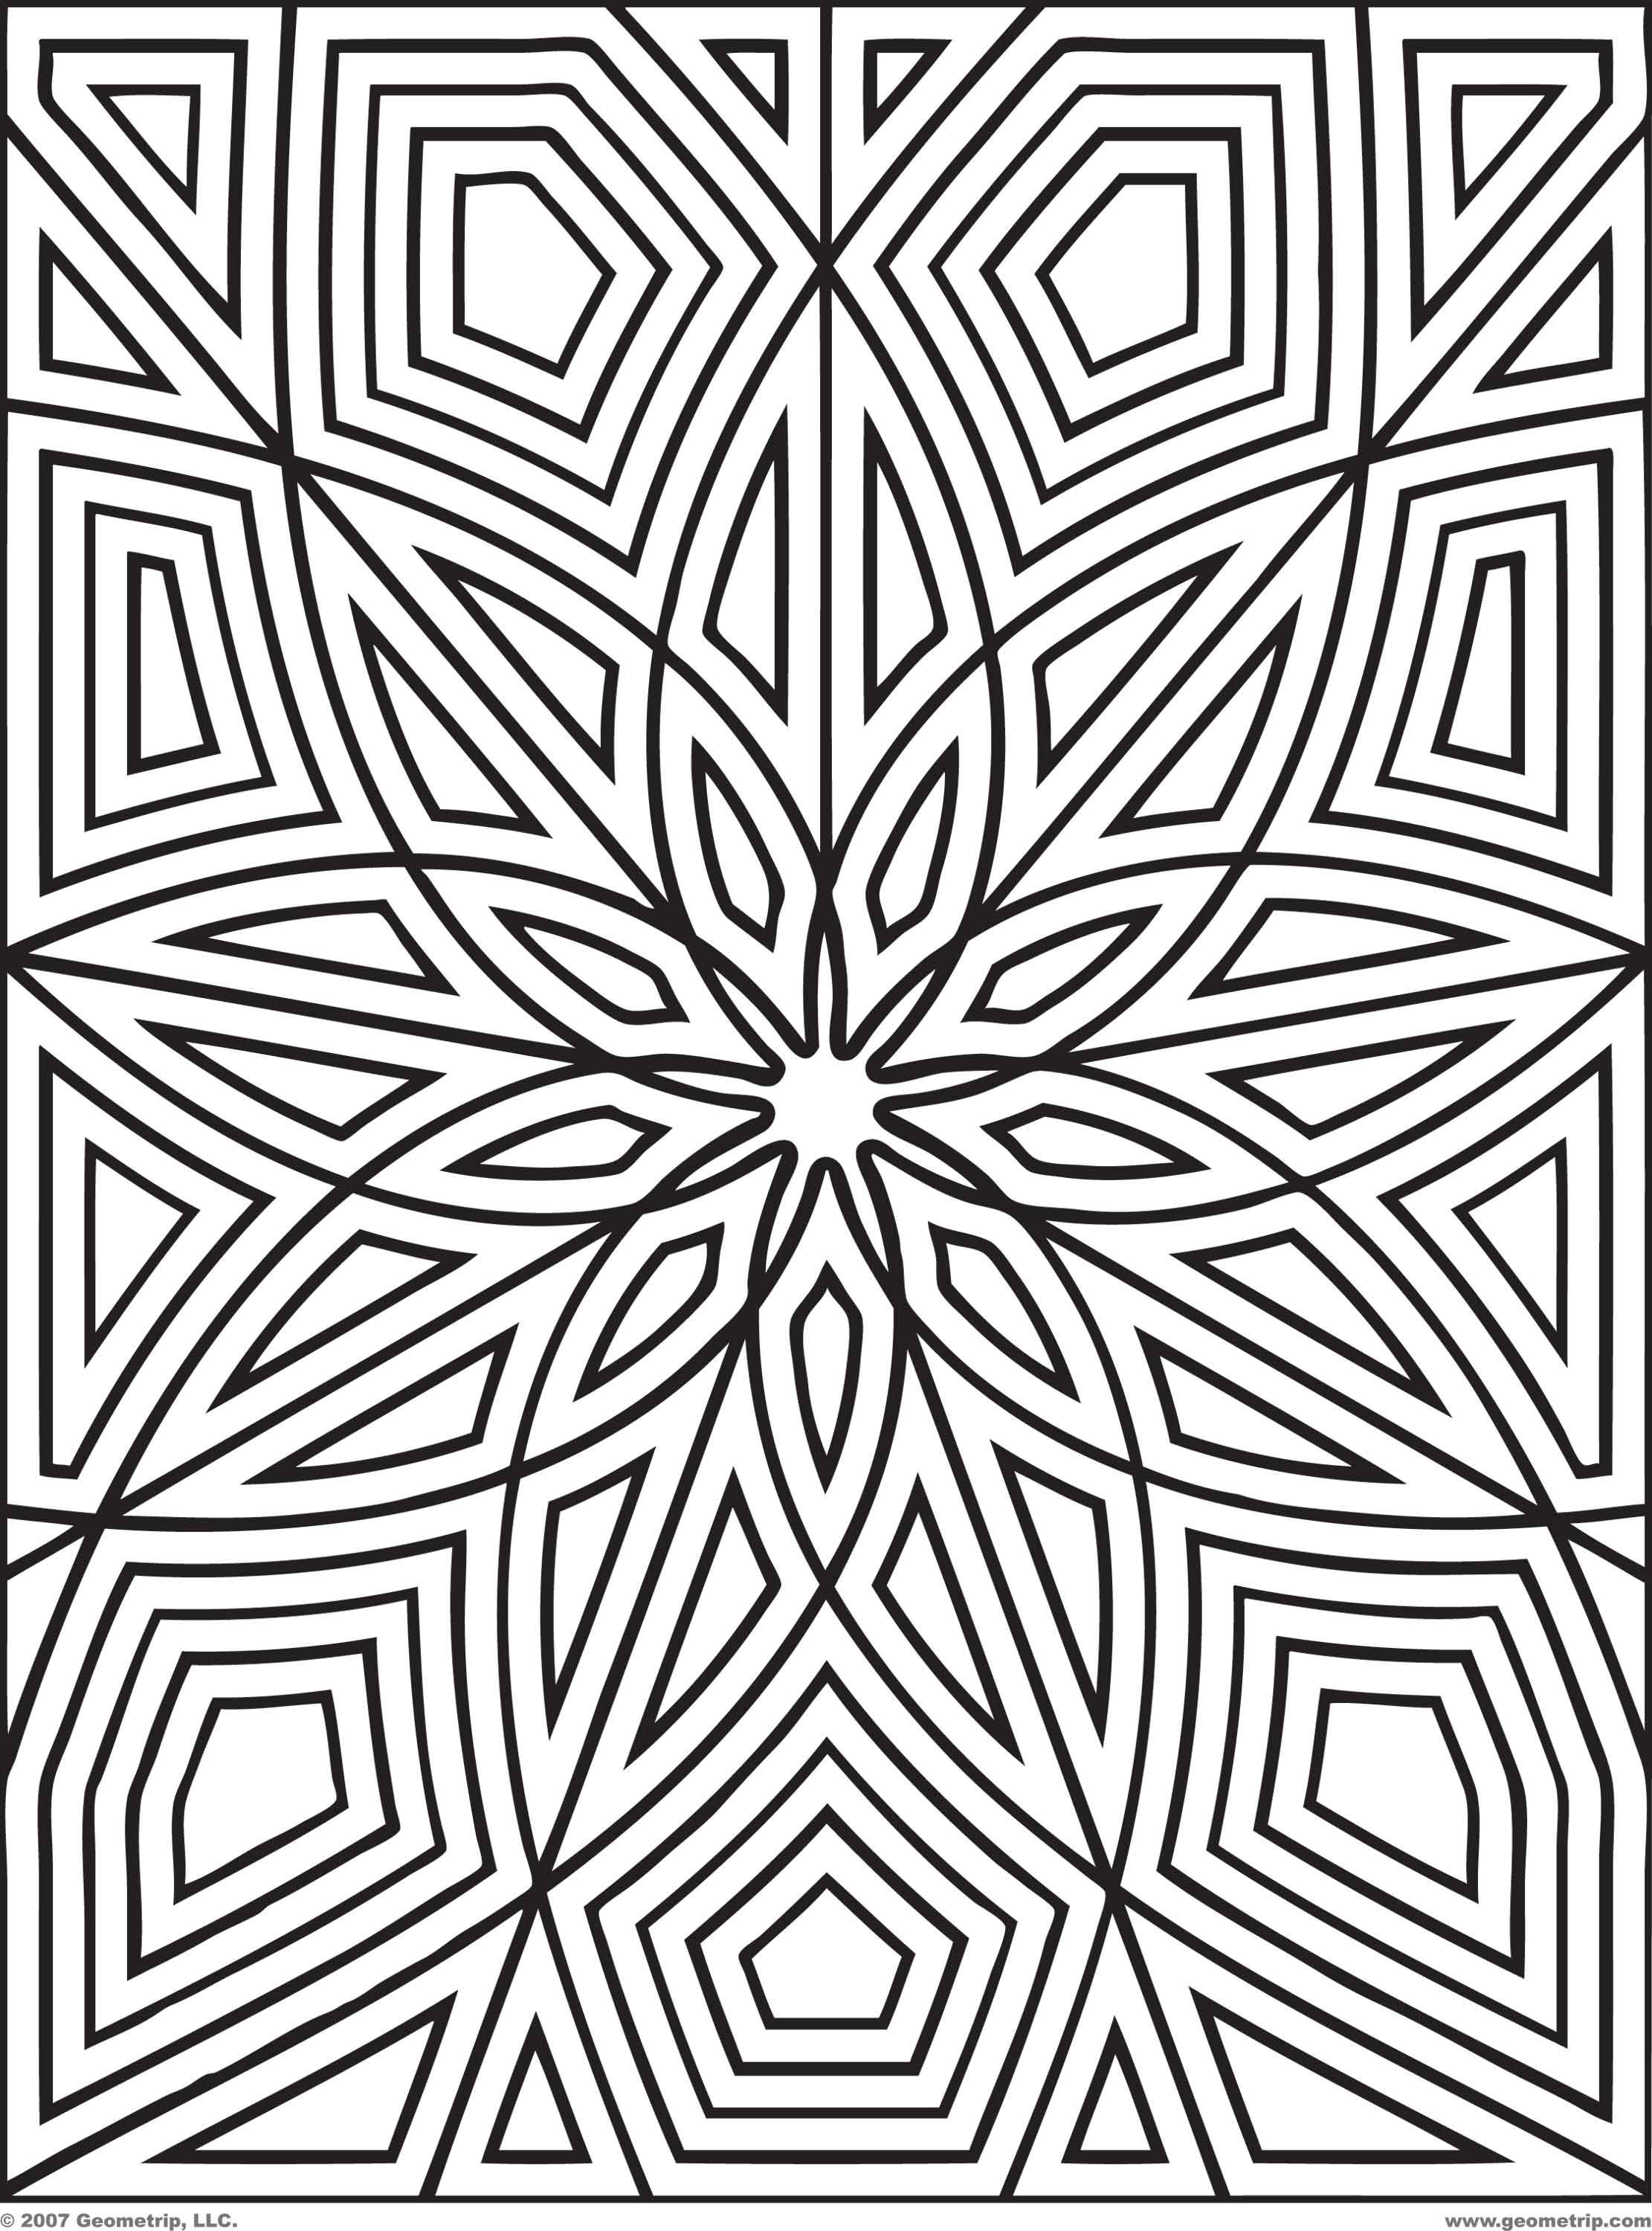 geometrip-geometric-coloring-designs-geometric-coloring-page-pattern-coloring-page